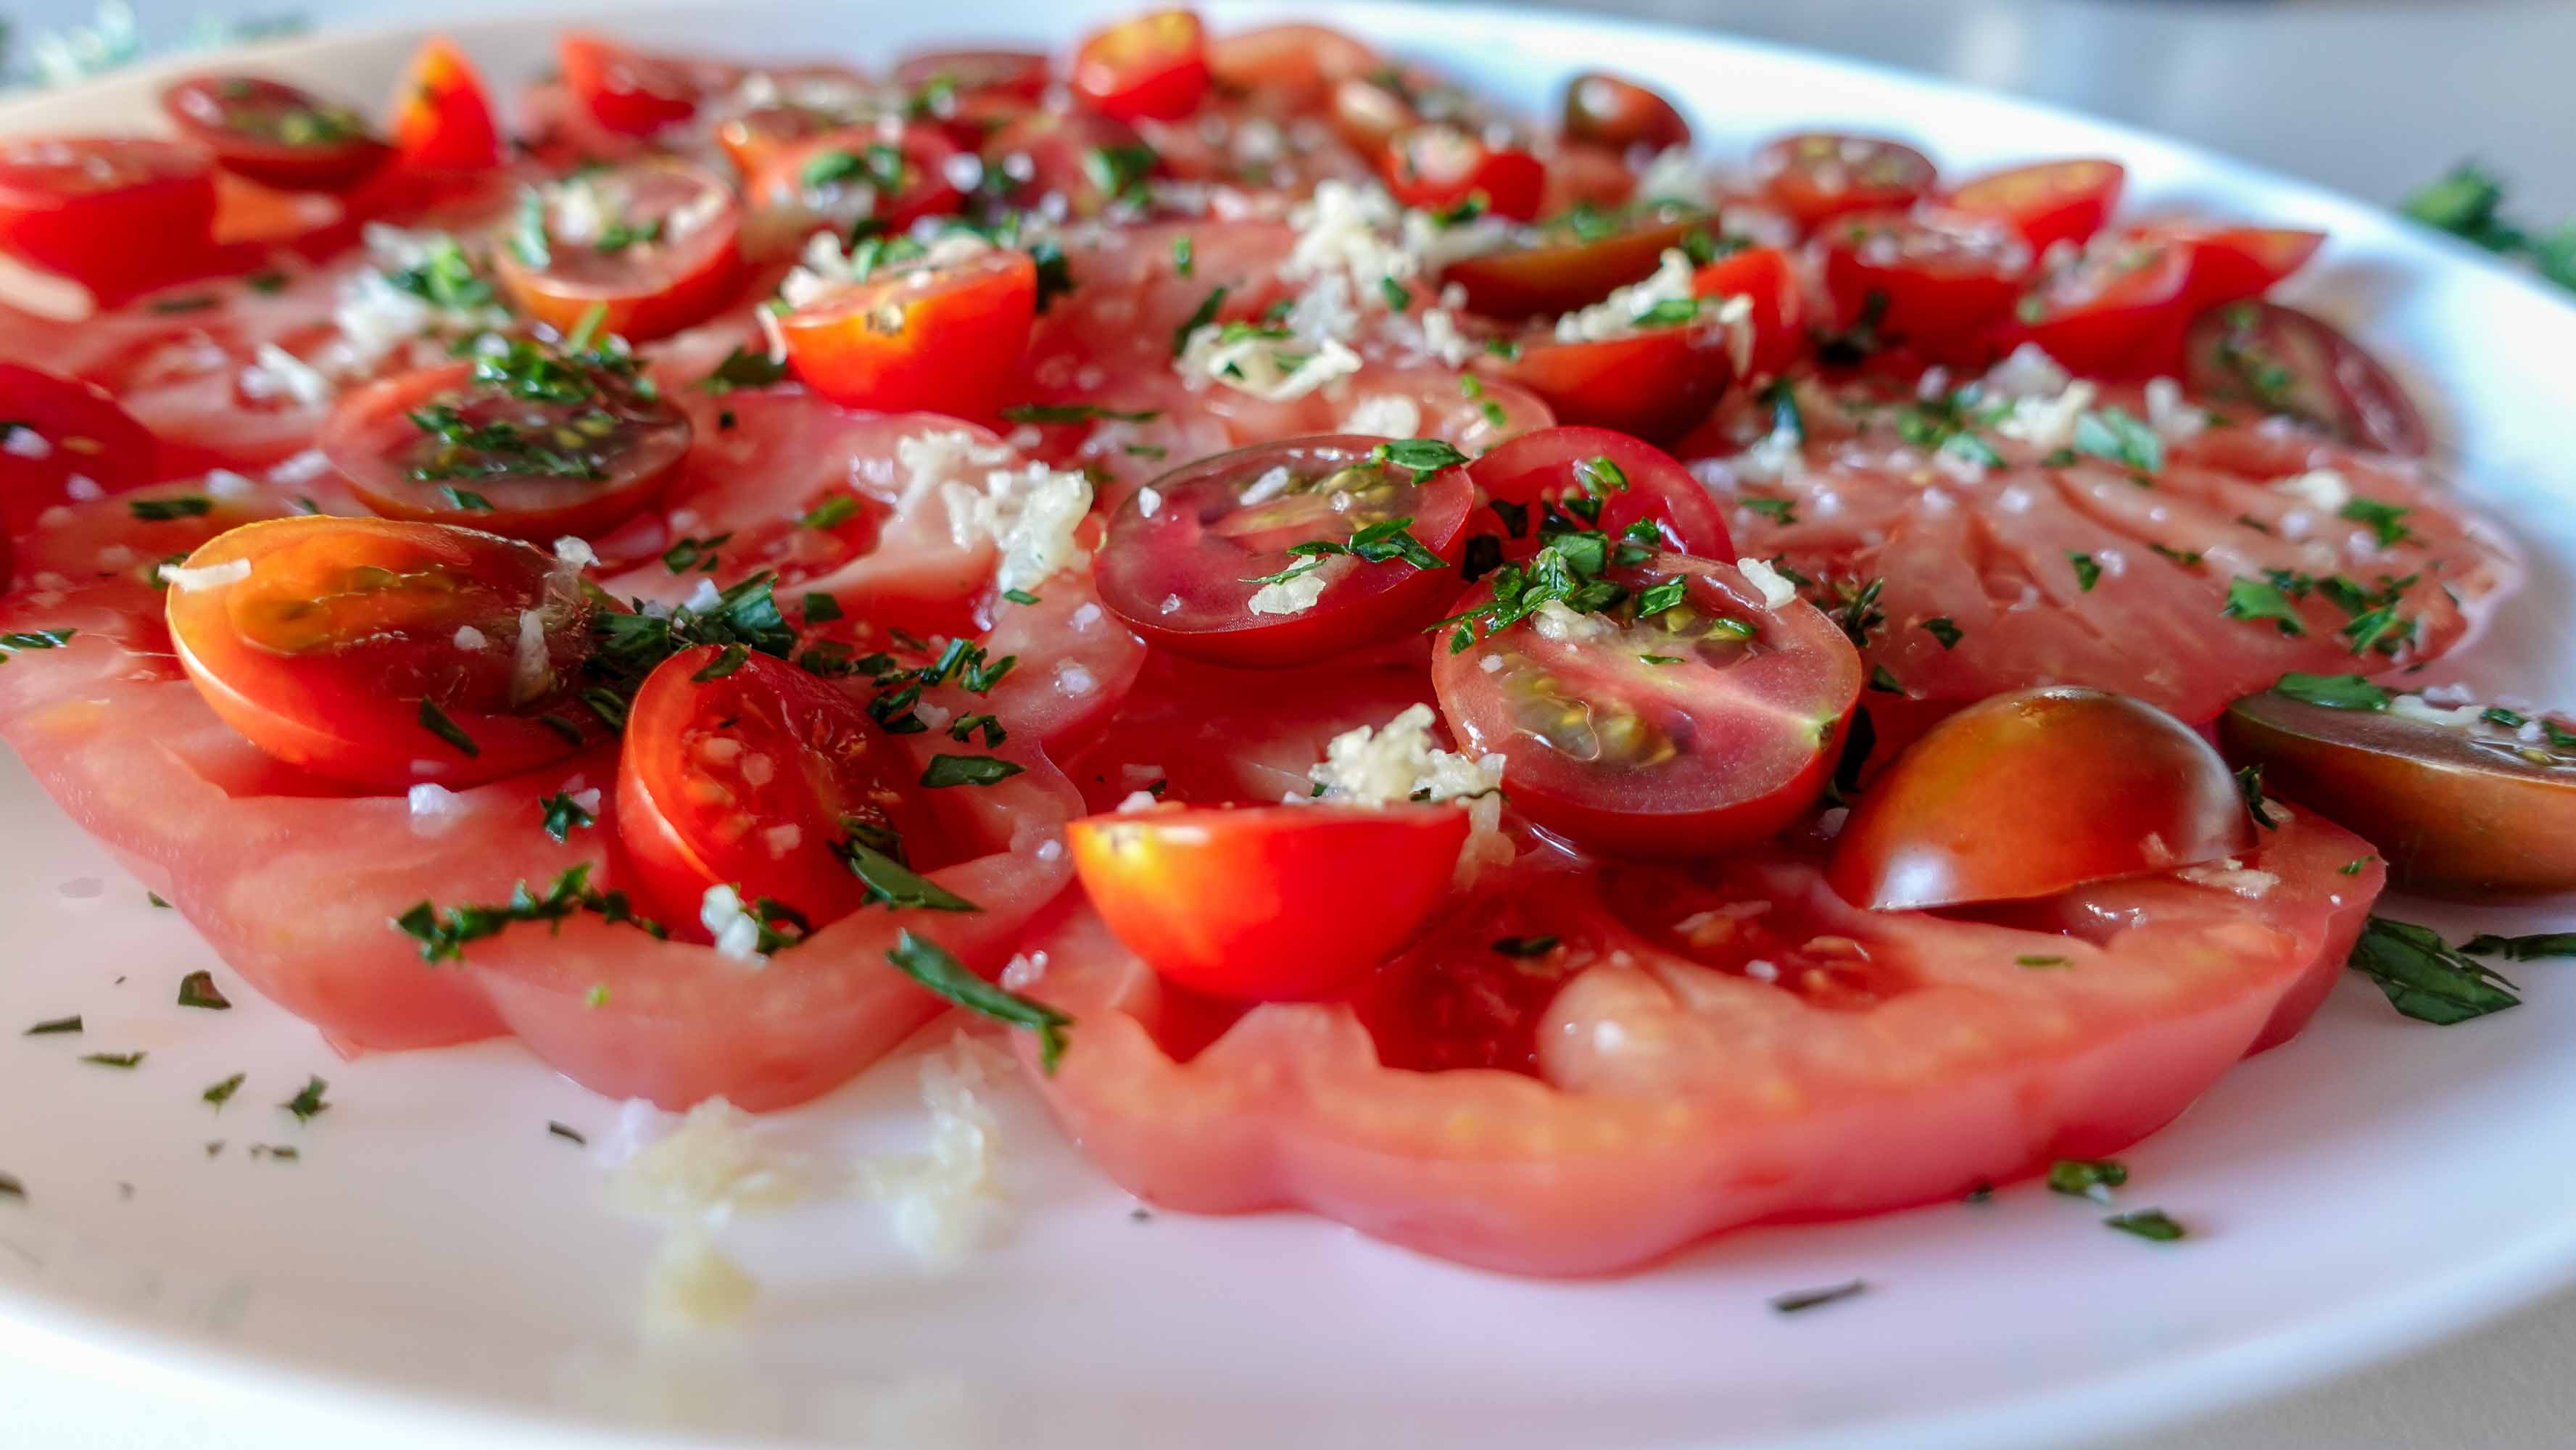 Delicious garlic tomato salad on a plate